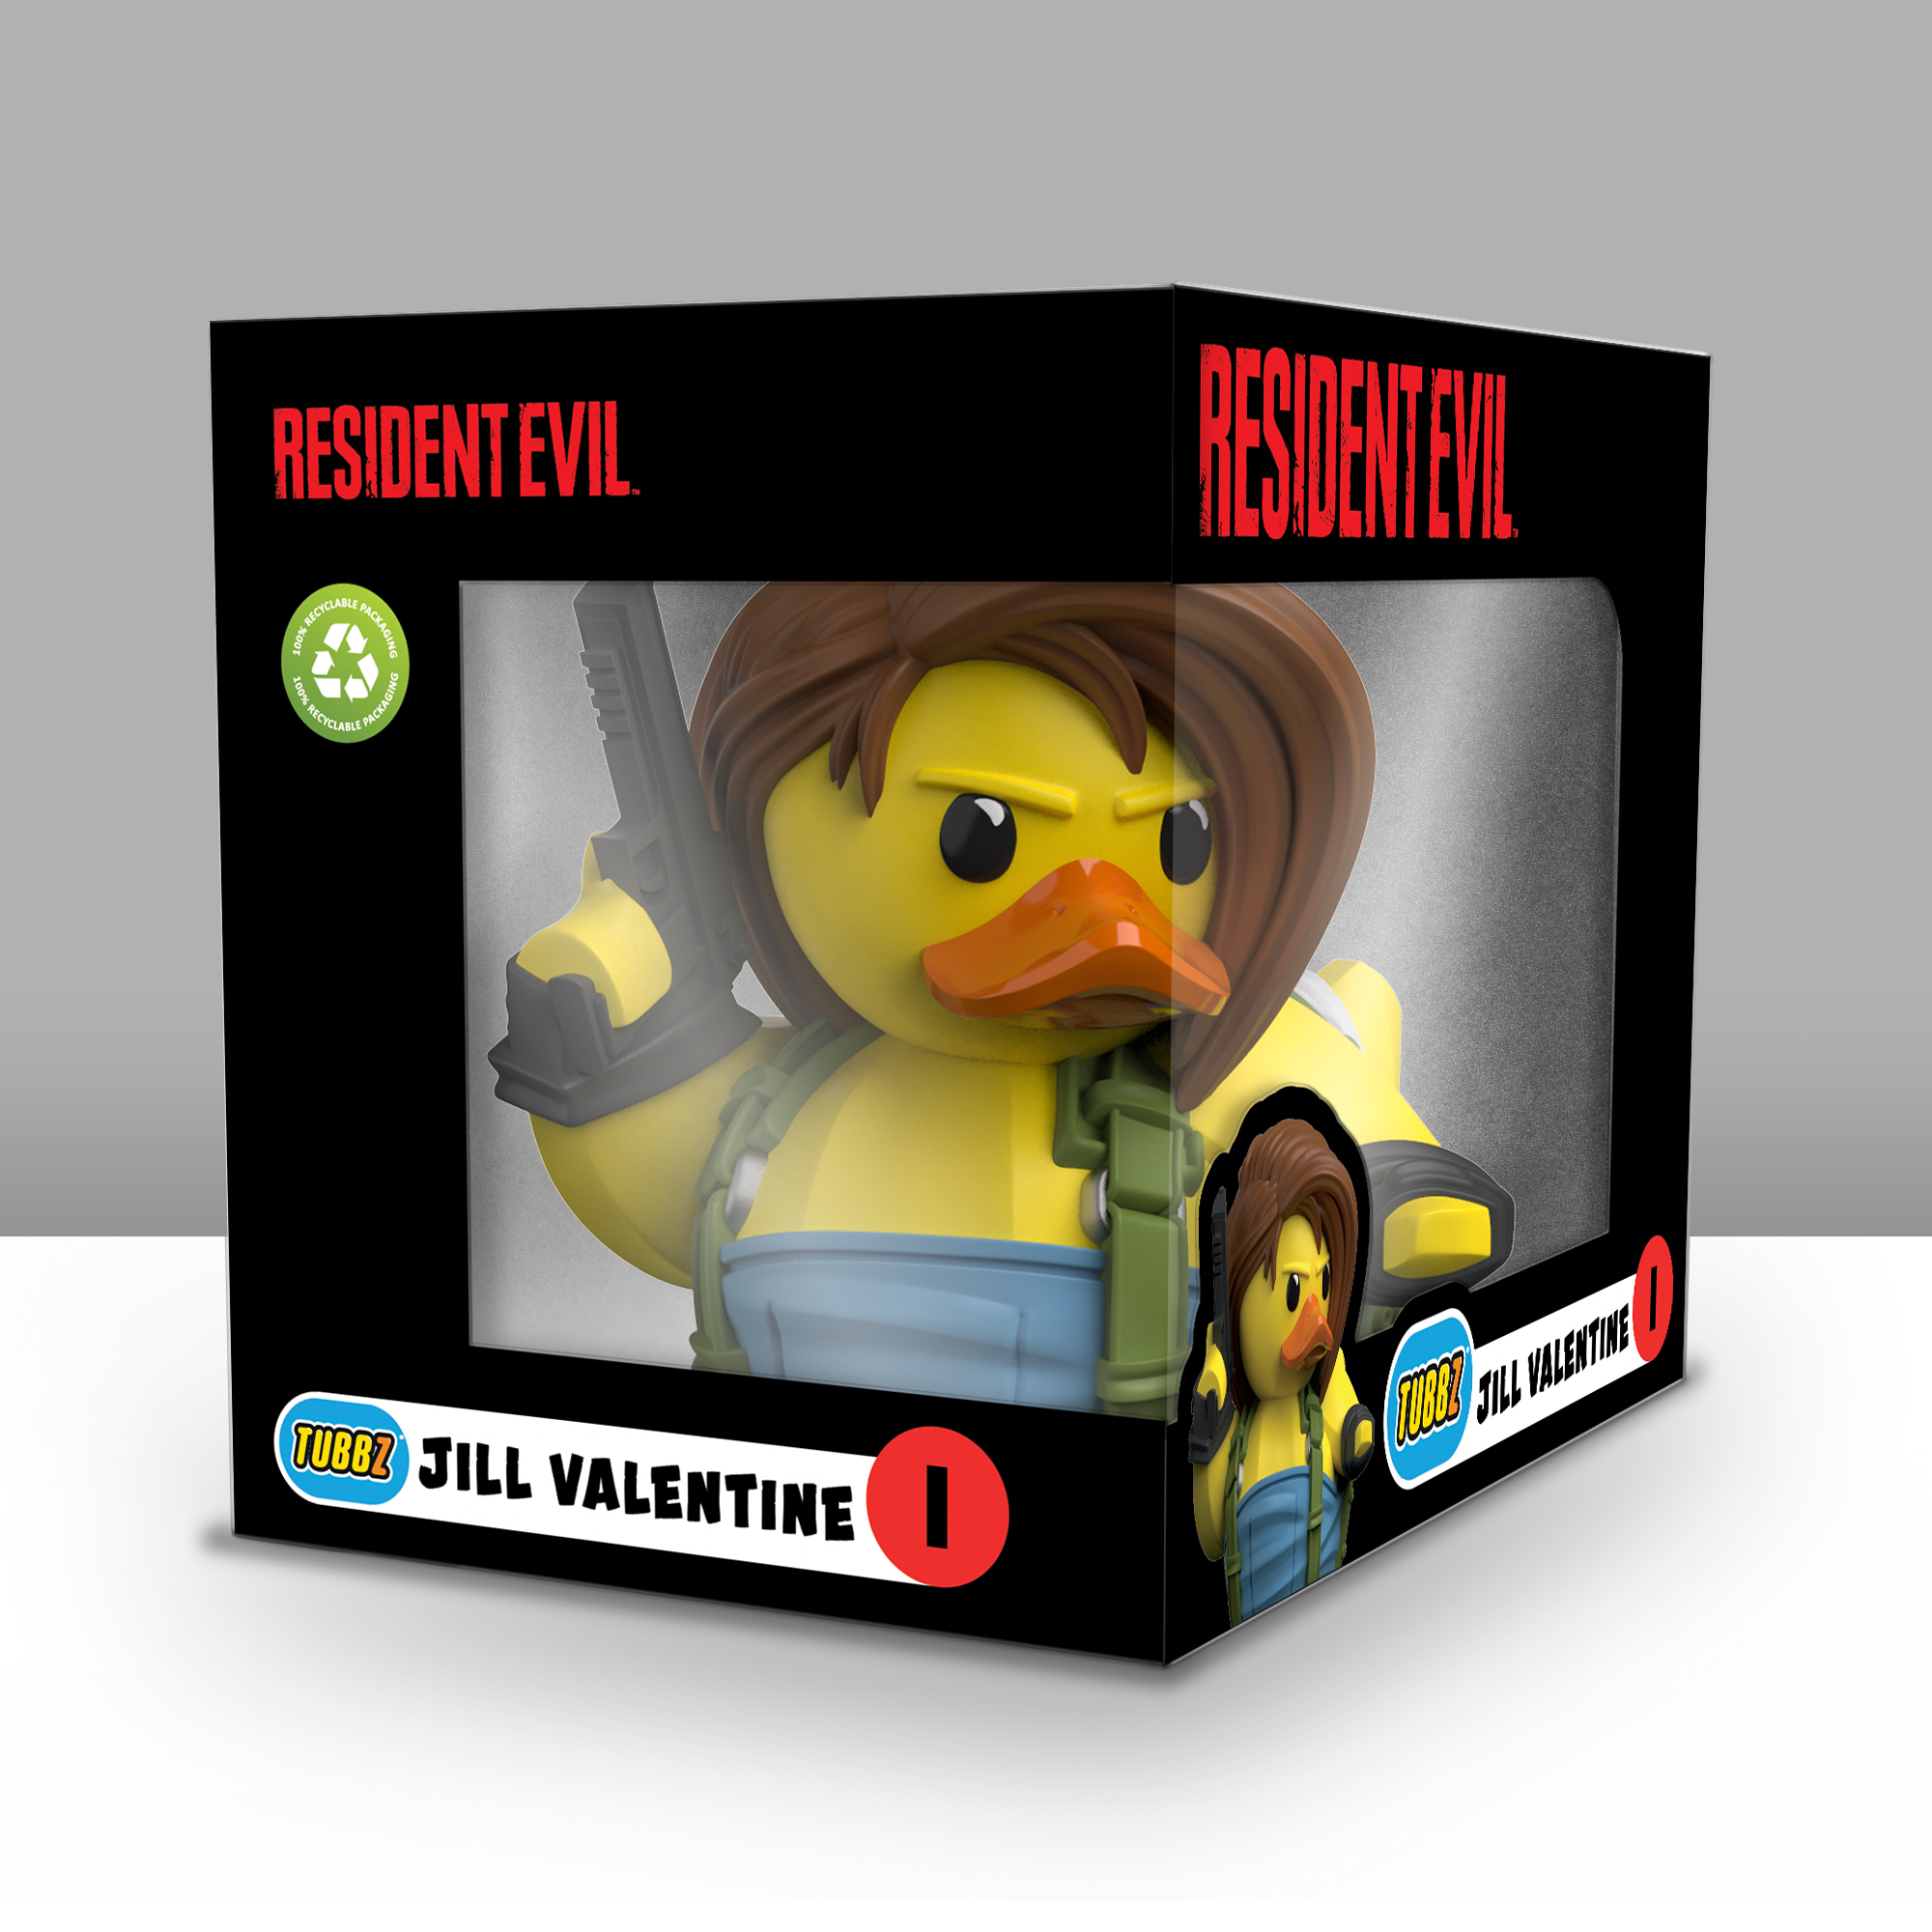 [Pre-order] TUBBZ BOX EDITION "Resident Evil" Jill Valentine